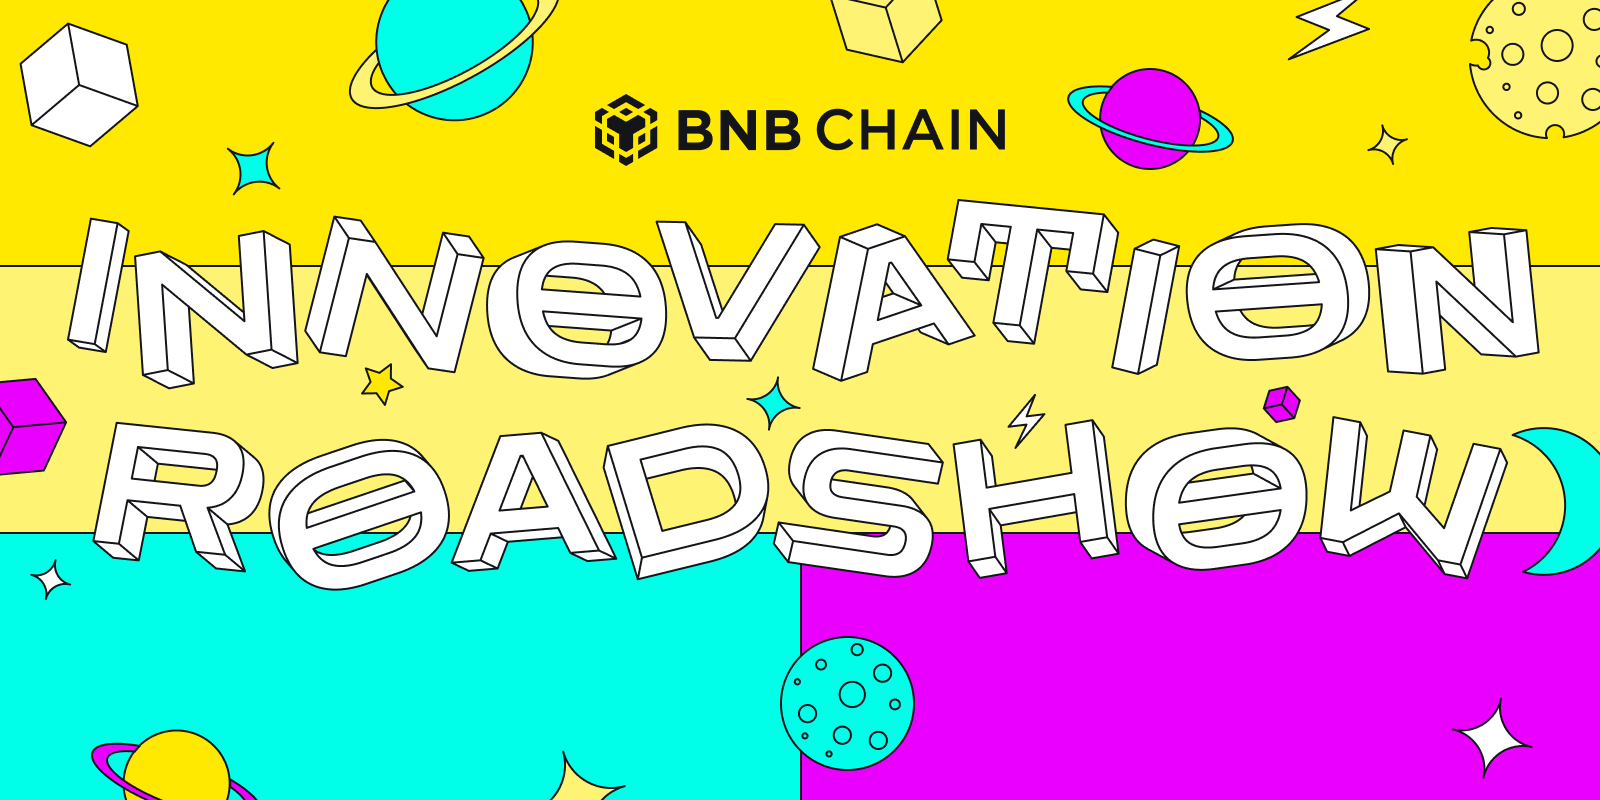 BNB Chain Innovation Roadshow